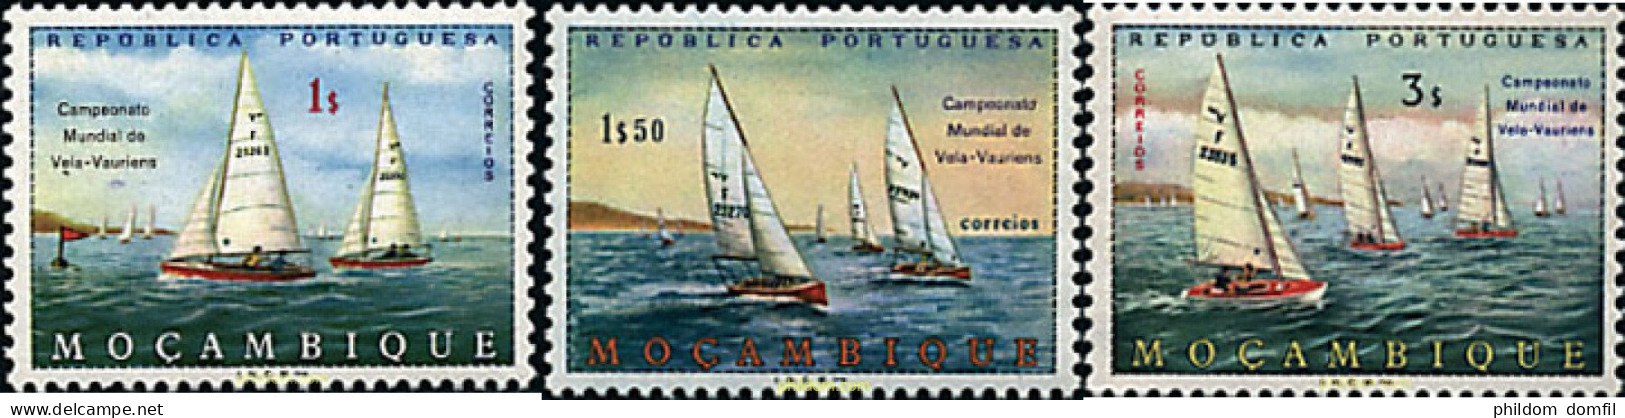 27626 MNH MOZAMBIQUE 1973 CAMPEONATOS DEL MUNDO DE VELA - Mozambique